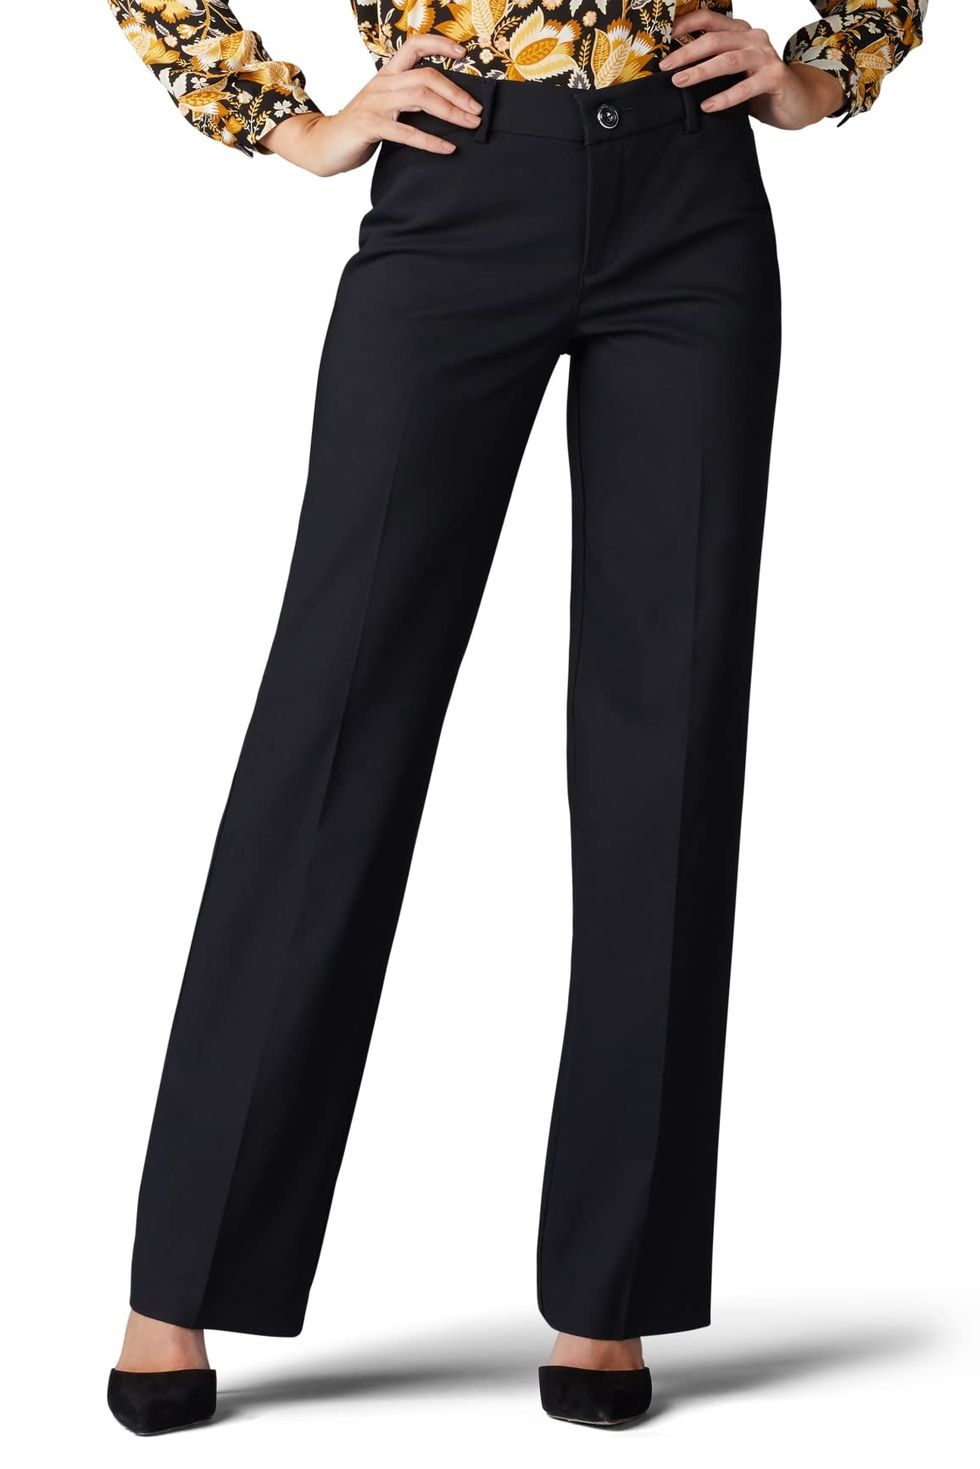 Autumn Winter Women Formal Office Work Pants Black Grey Business Suit  Trousers 4xl Ladies OL Pencil Pants